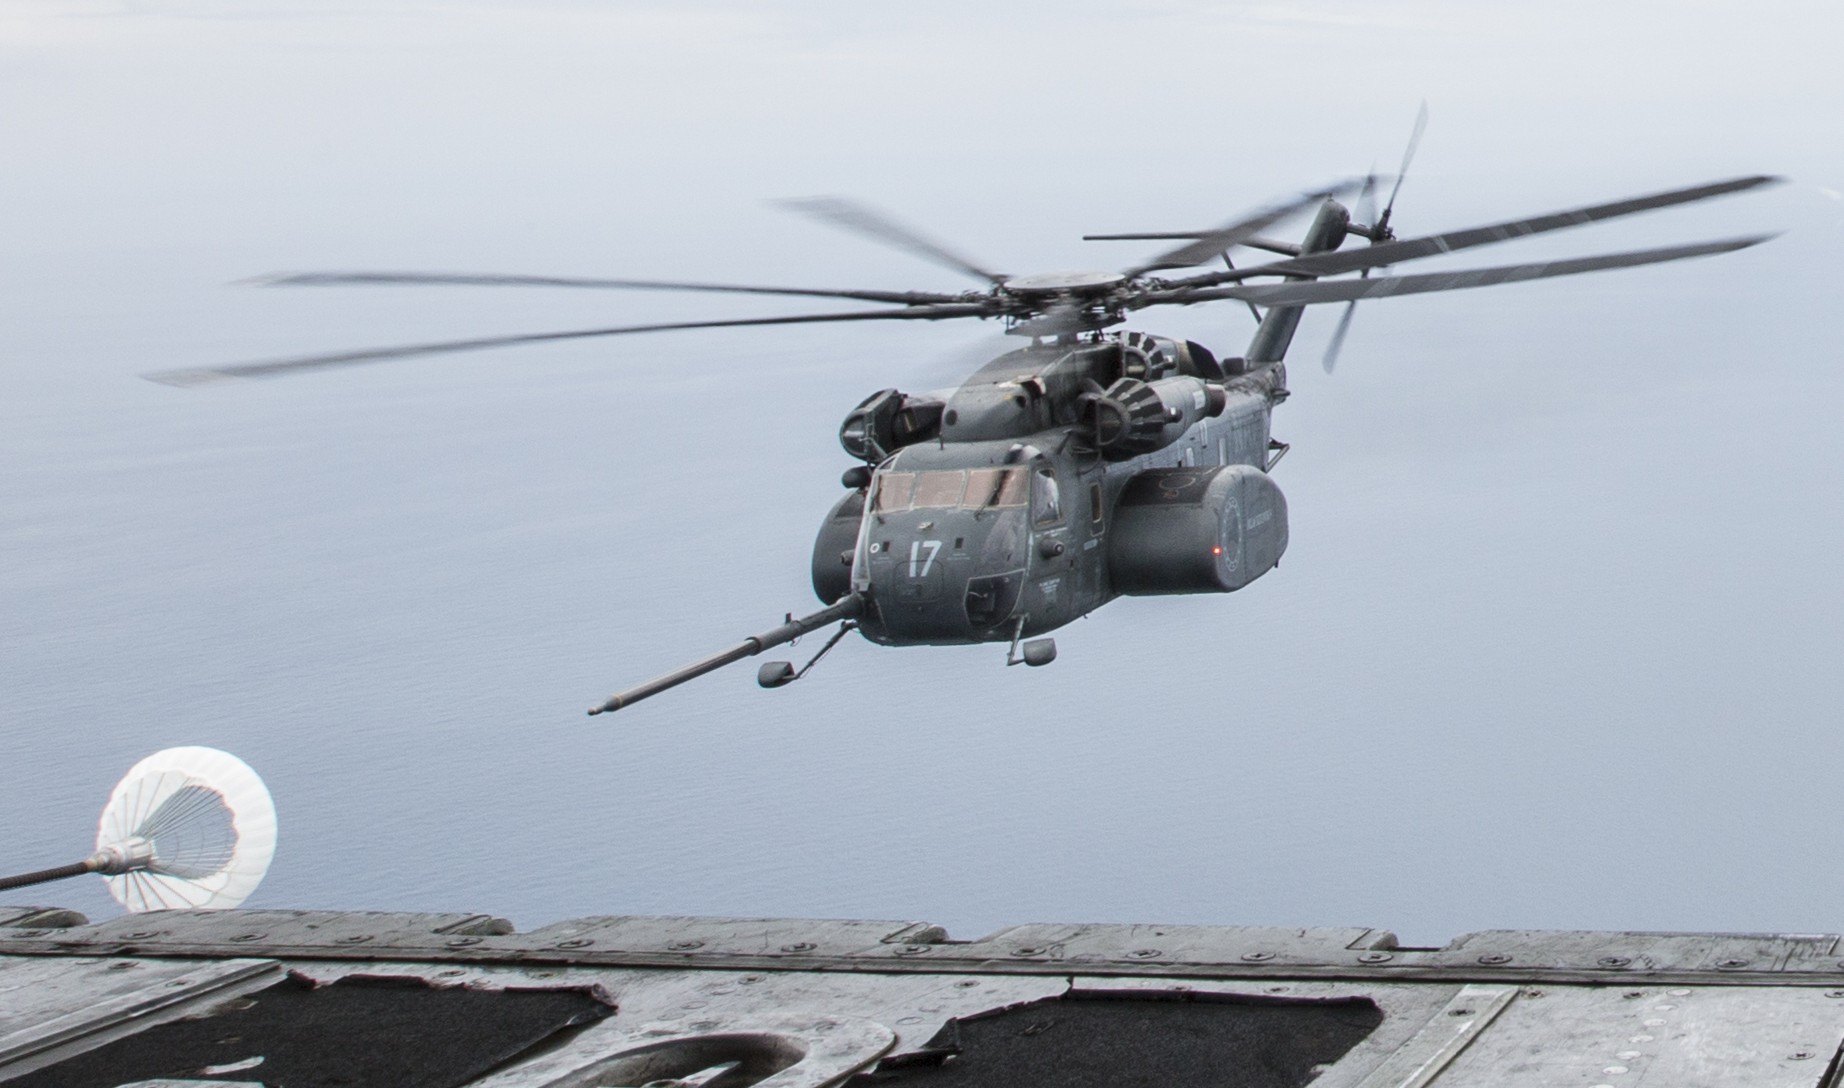 hm-15 blackhawks helicopter mine countermeasures squadron navy mh-53e sea dragon 19